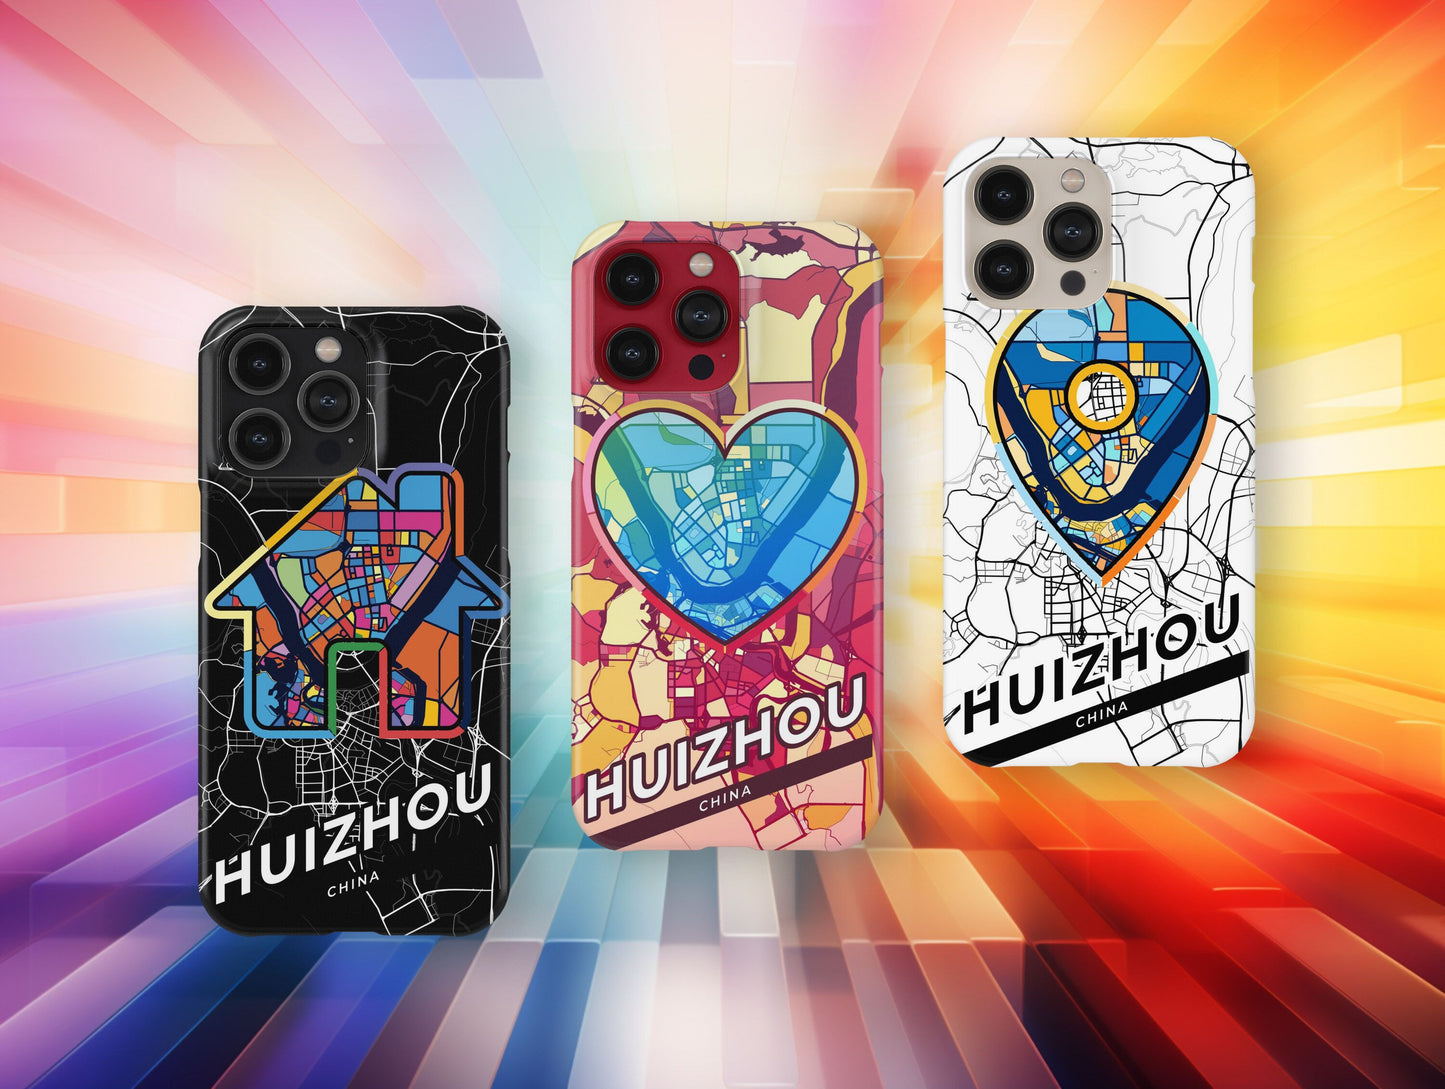 Huizhou China slim phone case with colorful icon. Birthday, wedding or housewarming gift. Couple match cases.